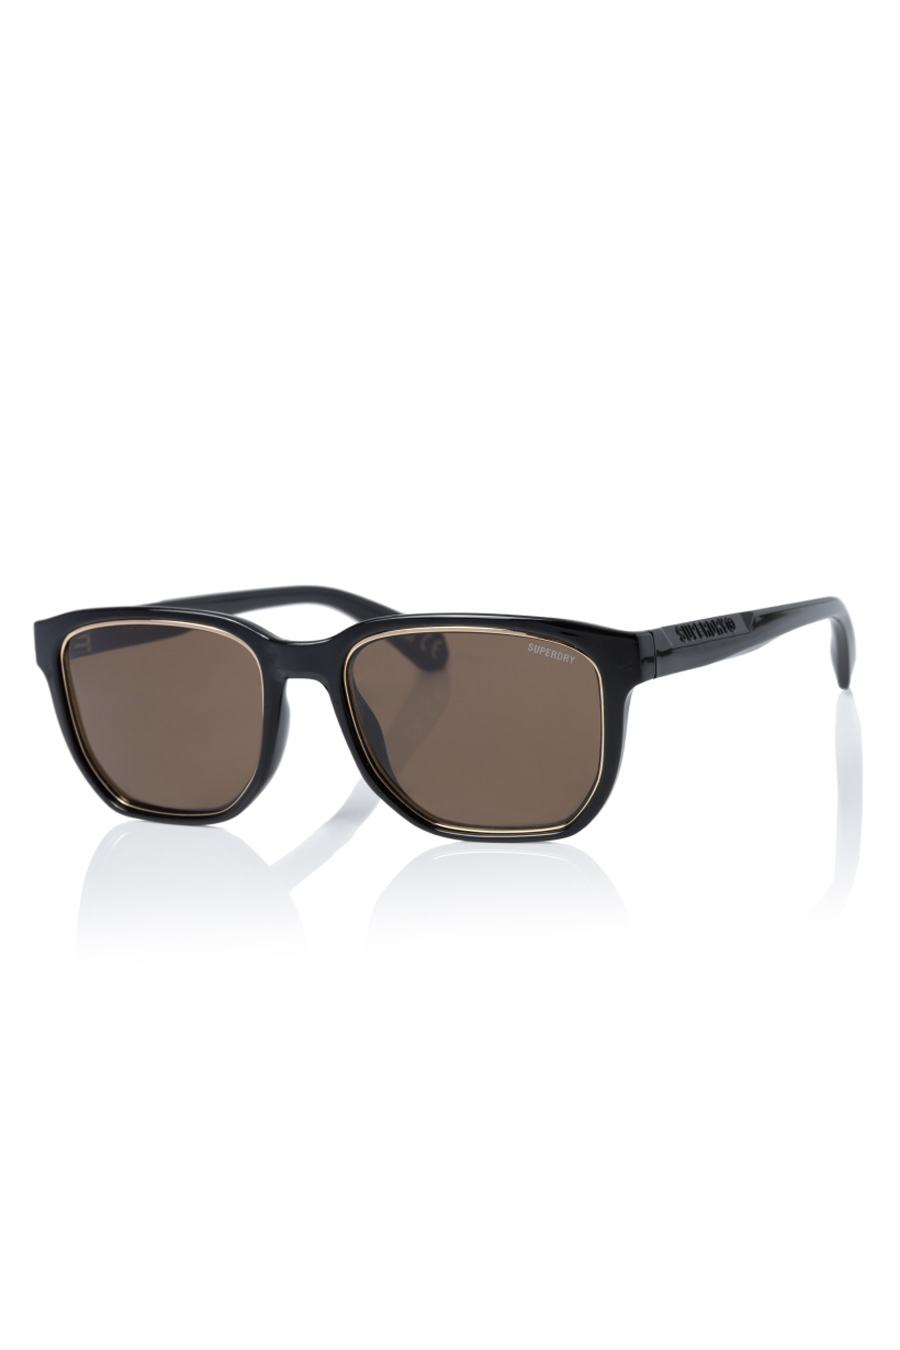 Sunglasses SUPERDRY SDS-5003-104